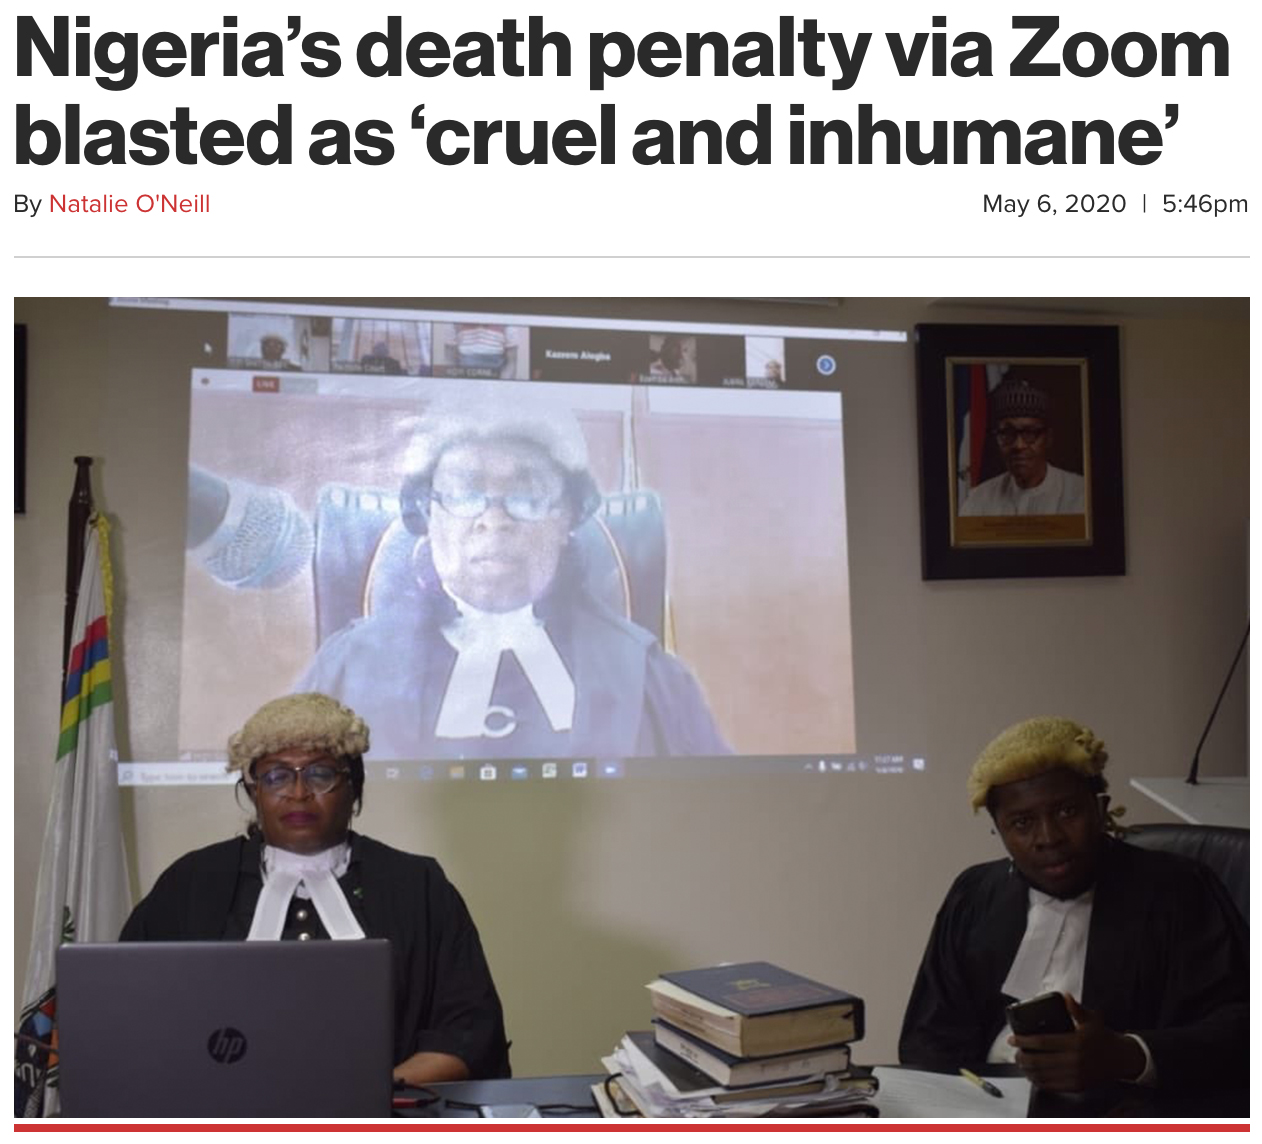 Nigeria's death penalty via Zoom blasted as 'cruel and inhumane'